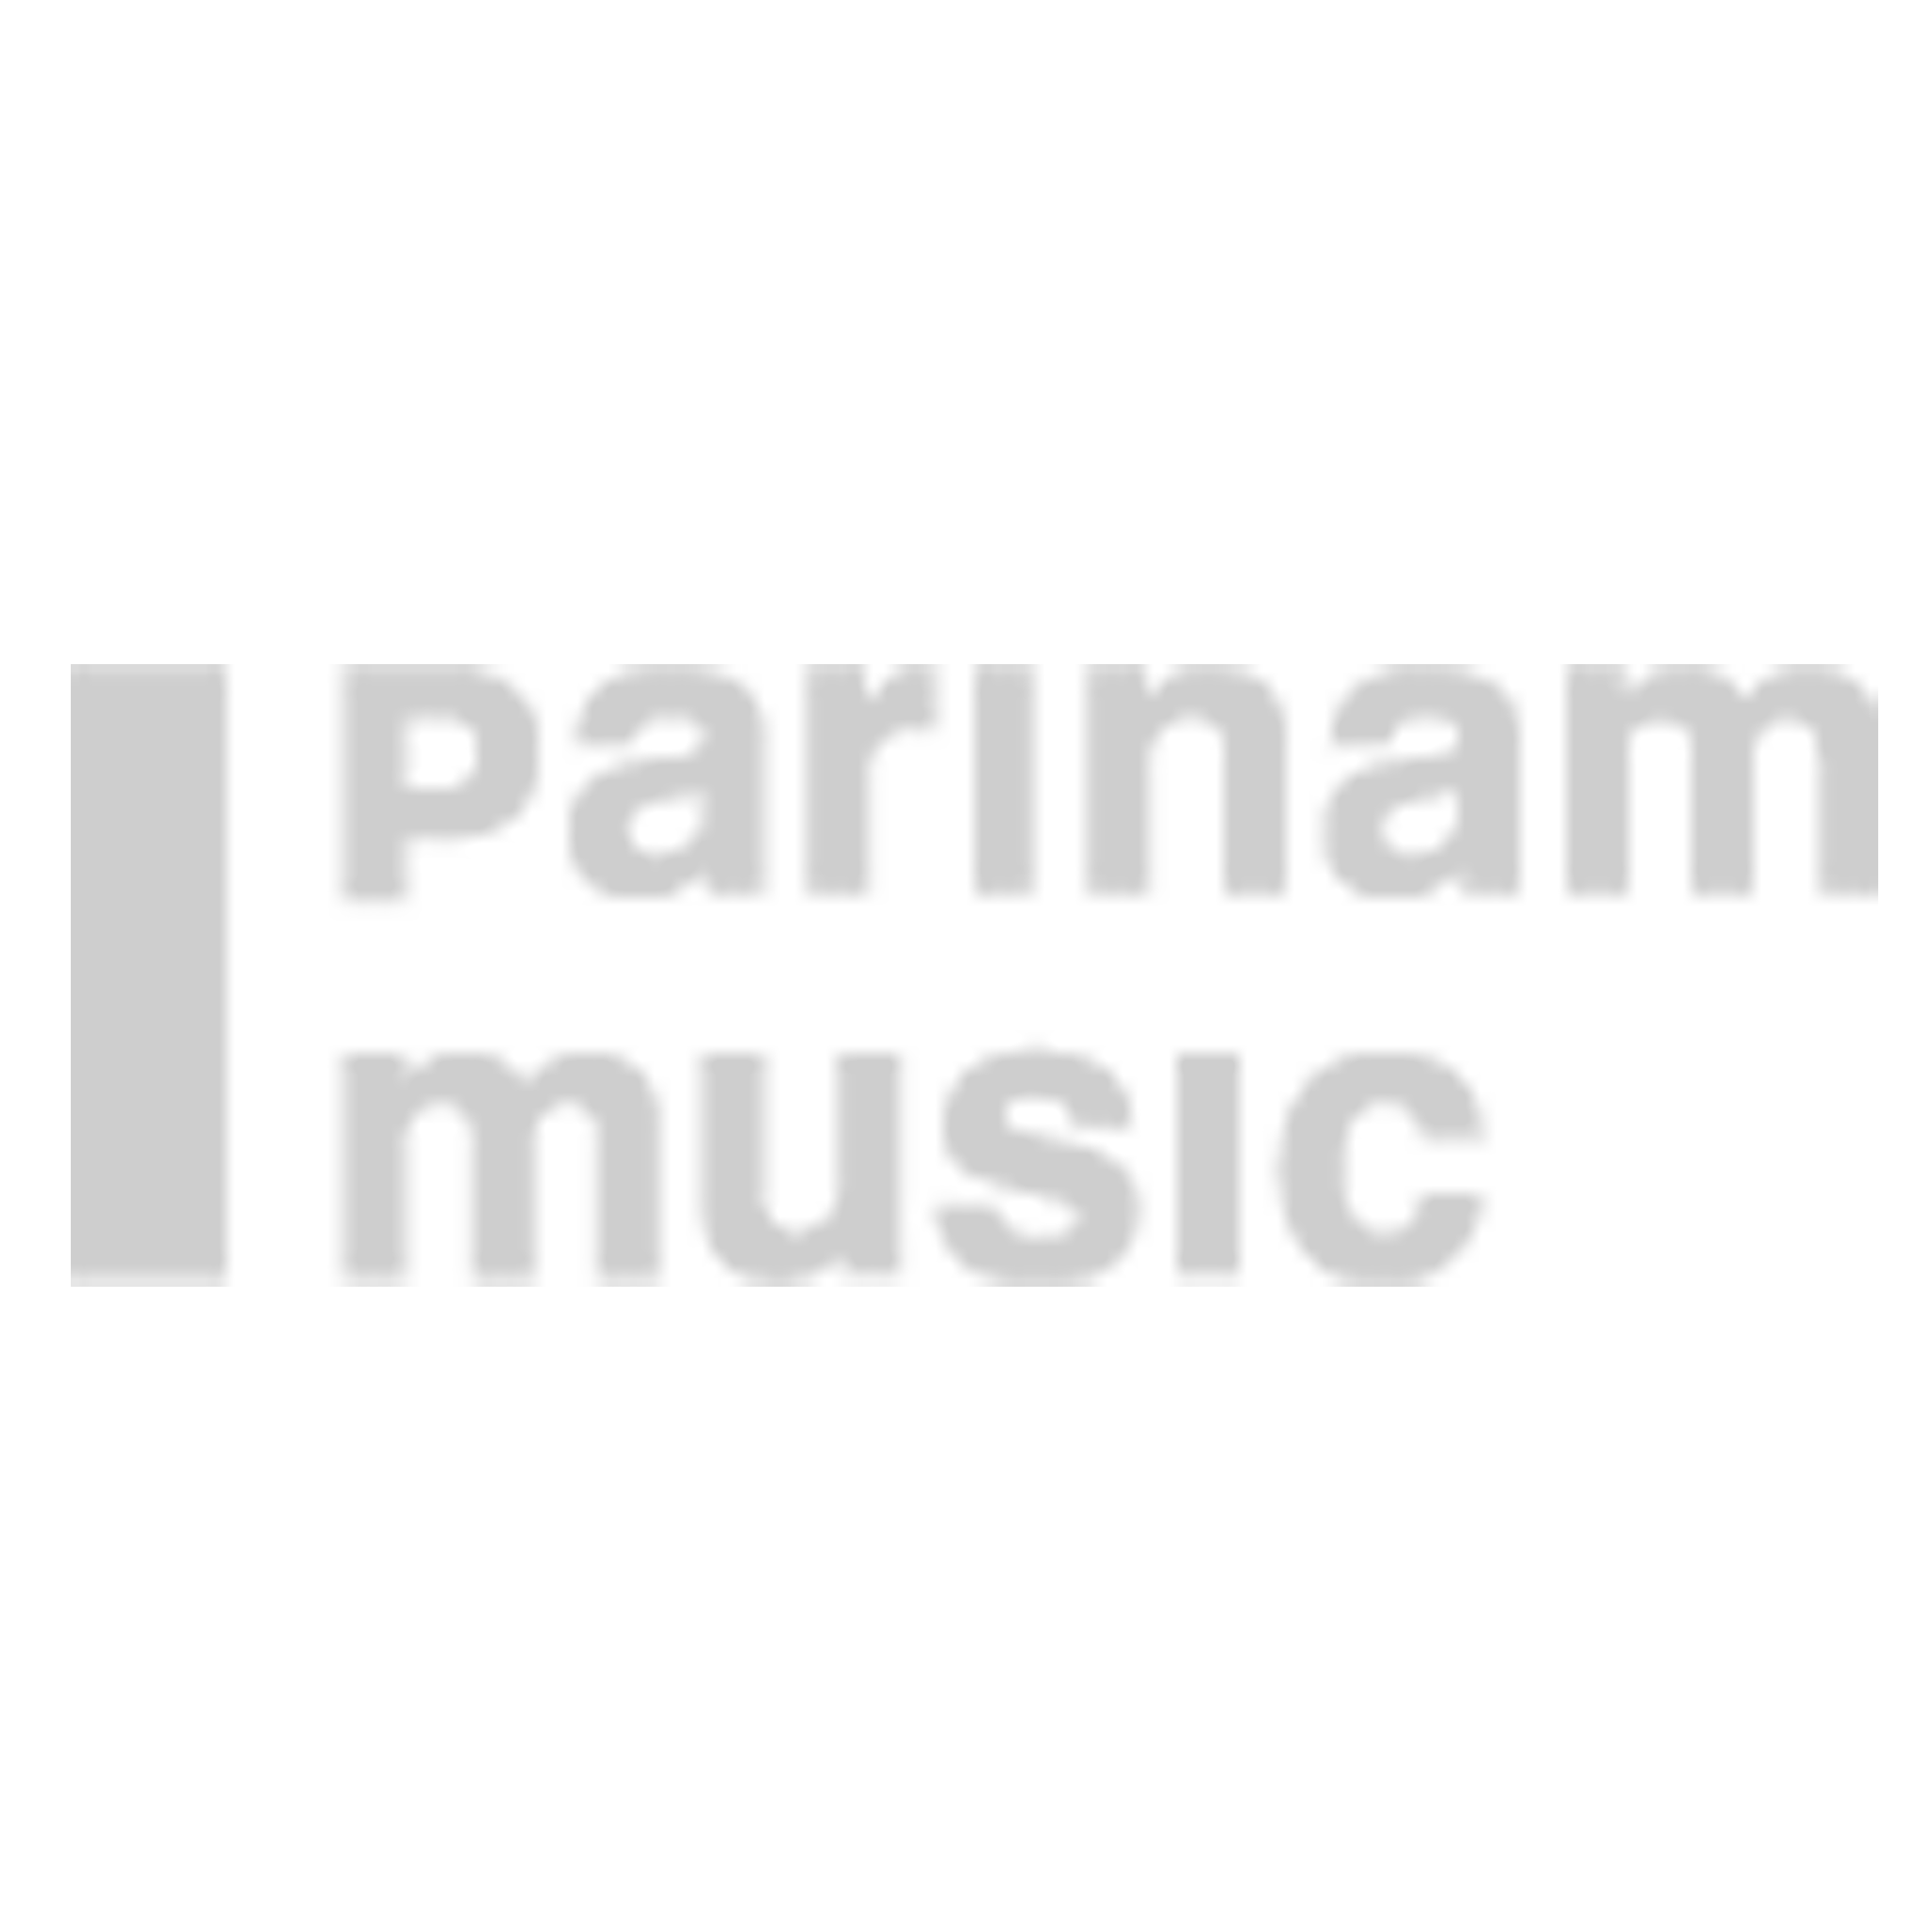 ParinamMusic